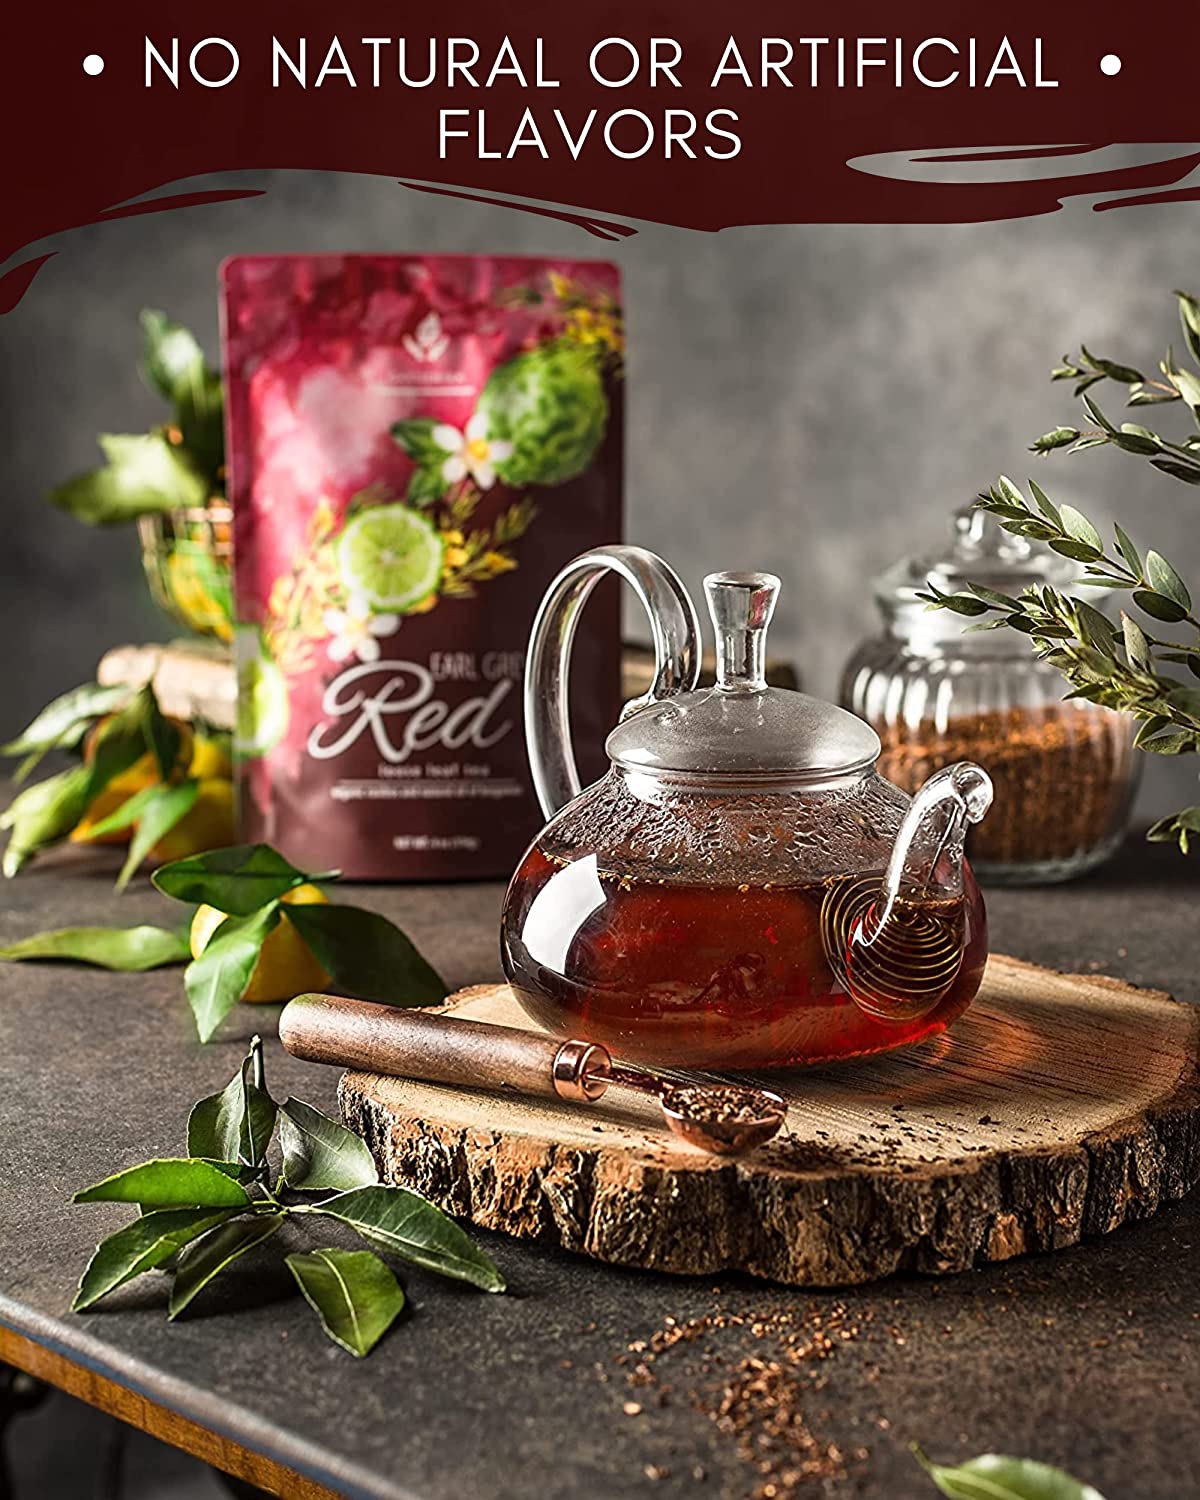  Rooibos Tea, USDA Certified Organic Tea, MY RED TEA